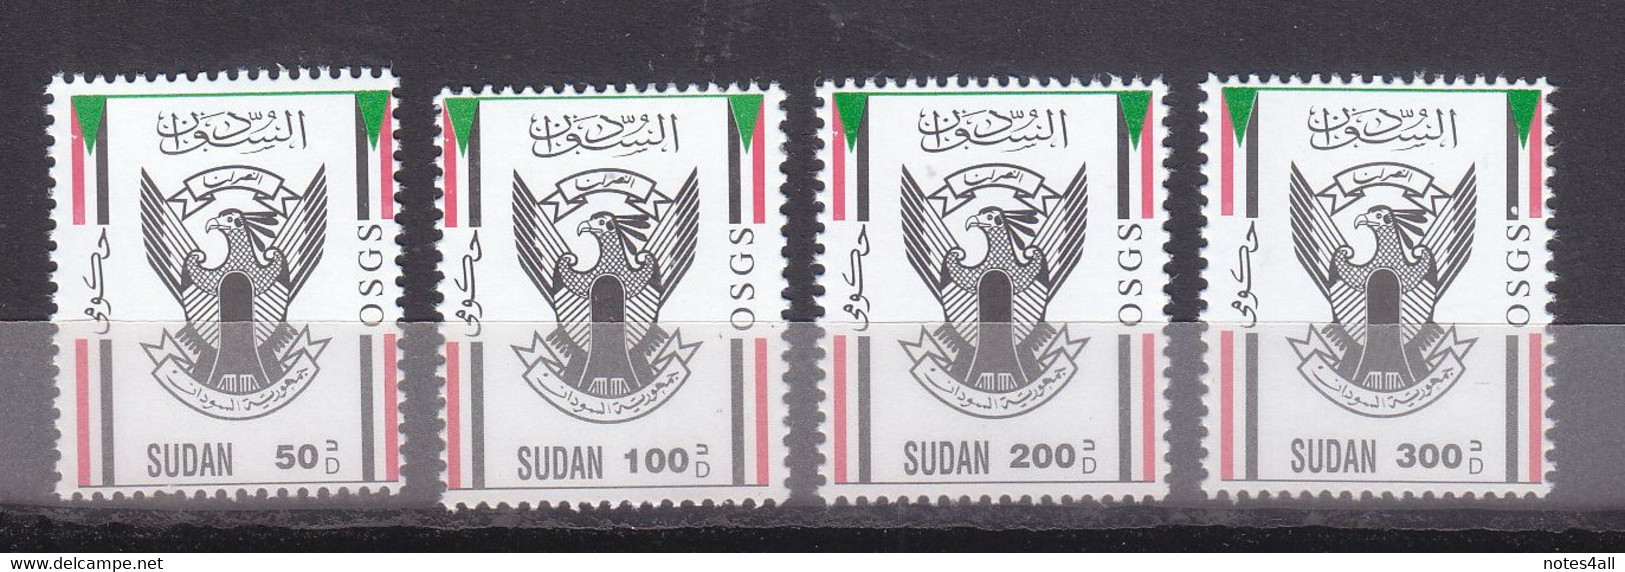 Stamps SUDAN 2003 SC O113 O116 OFFICIAL LOT X10 MNH SETS # 54 - Soudan (1954-...)